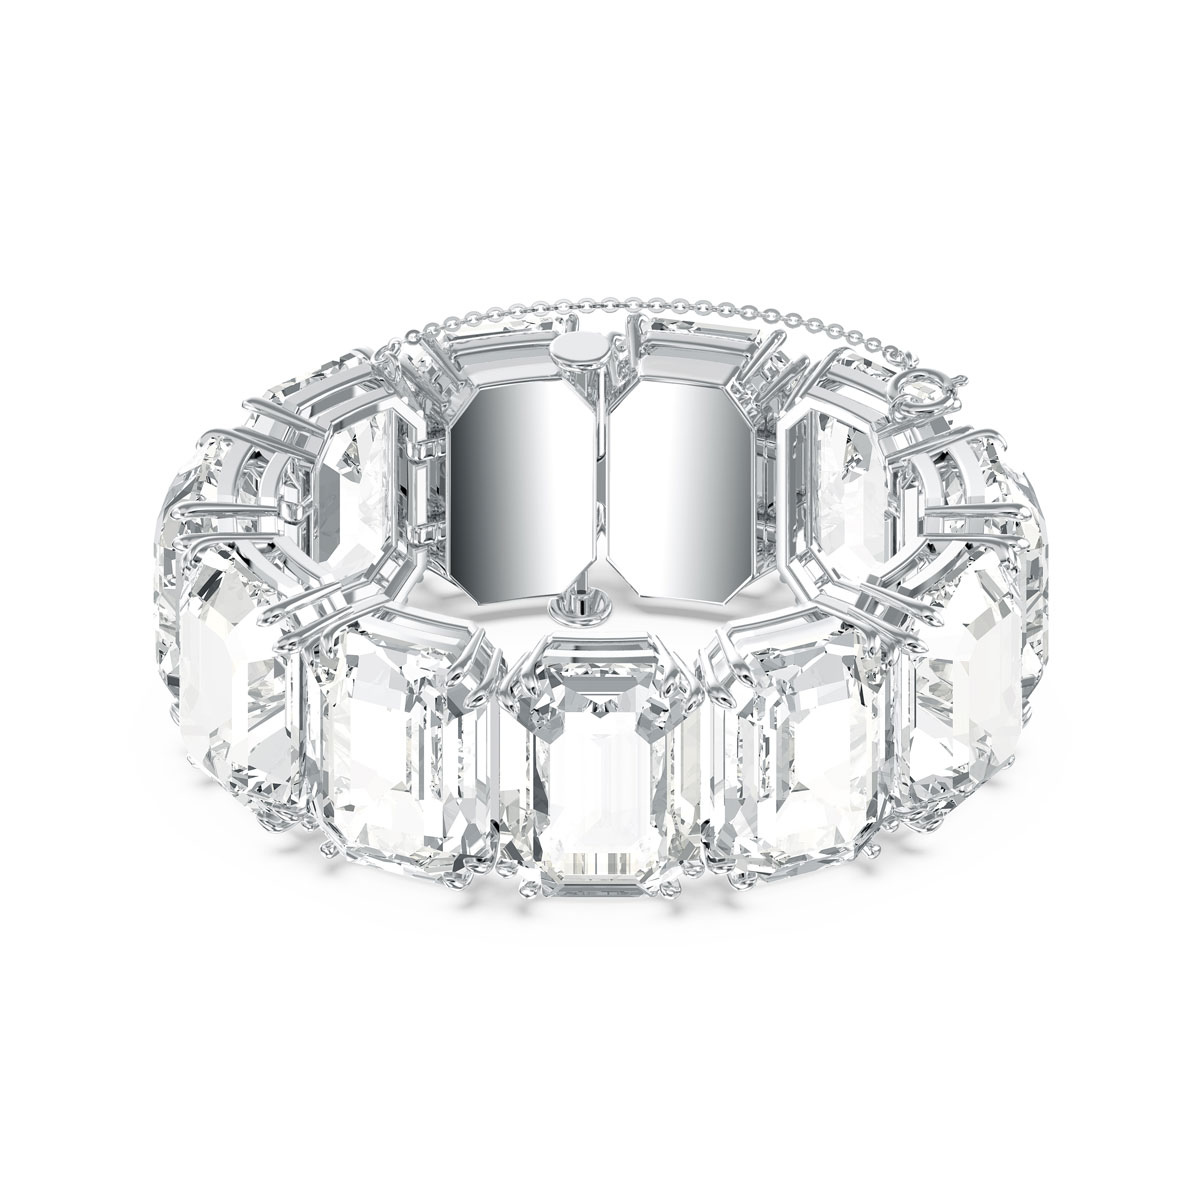 Swarovski Octagon Cut Crystals and Rhodium Millenia Bracelet